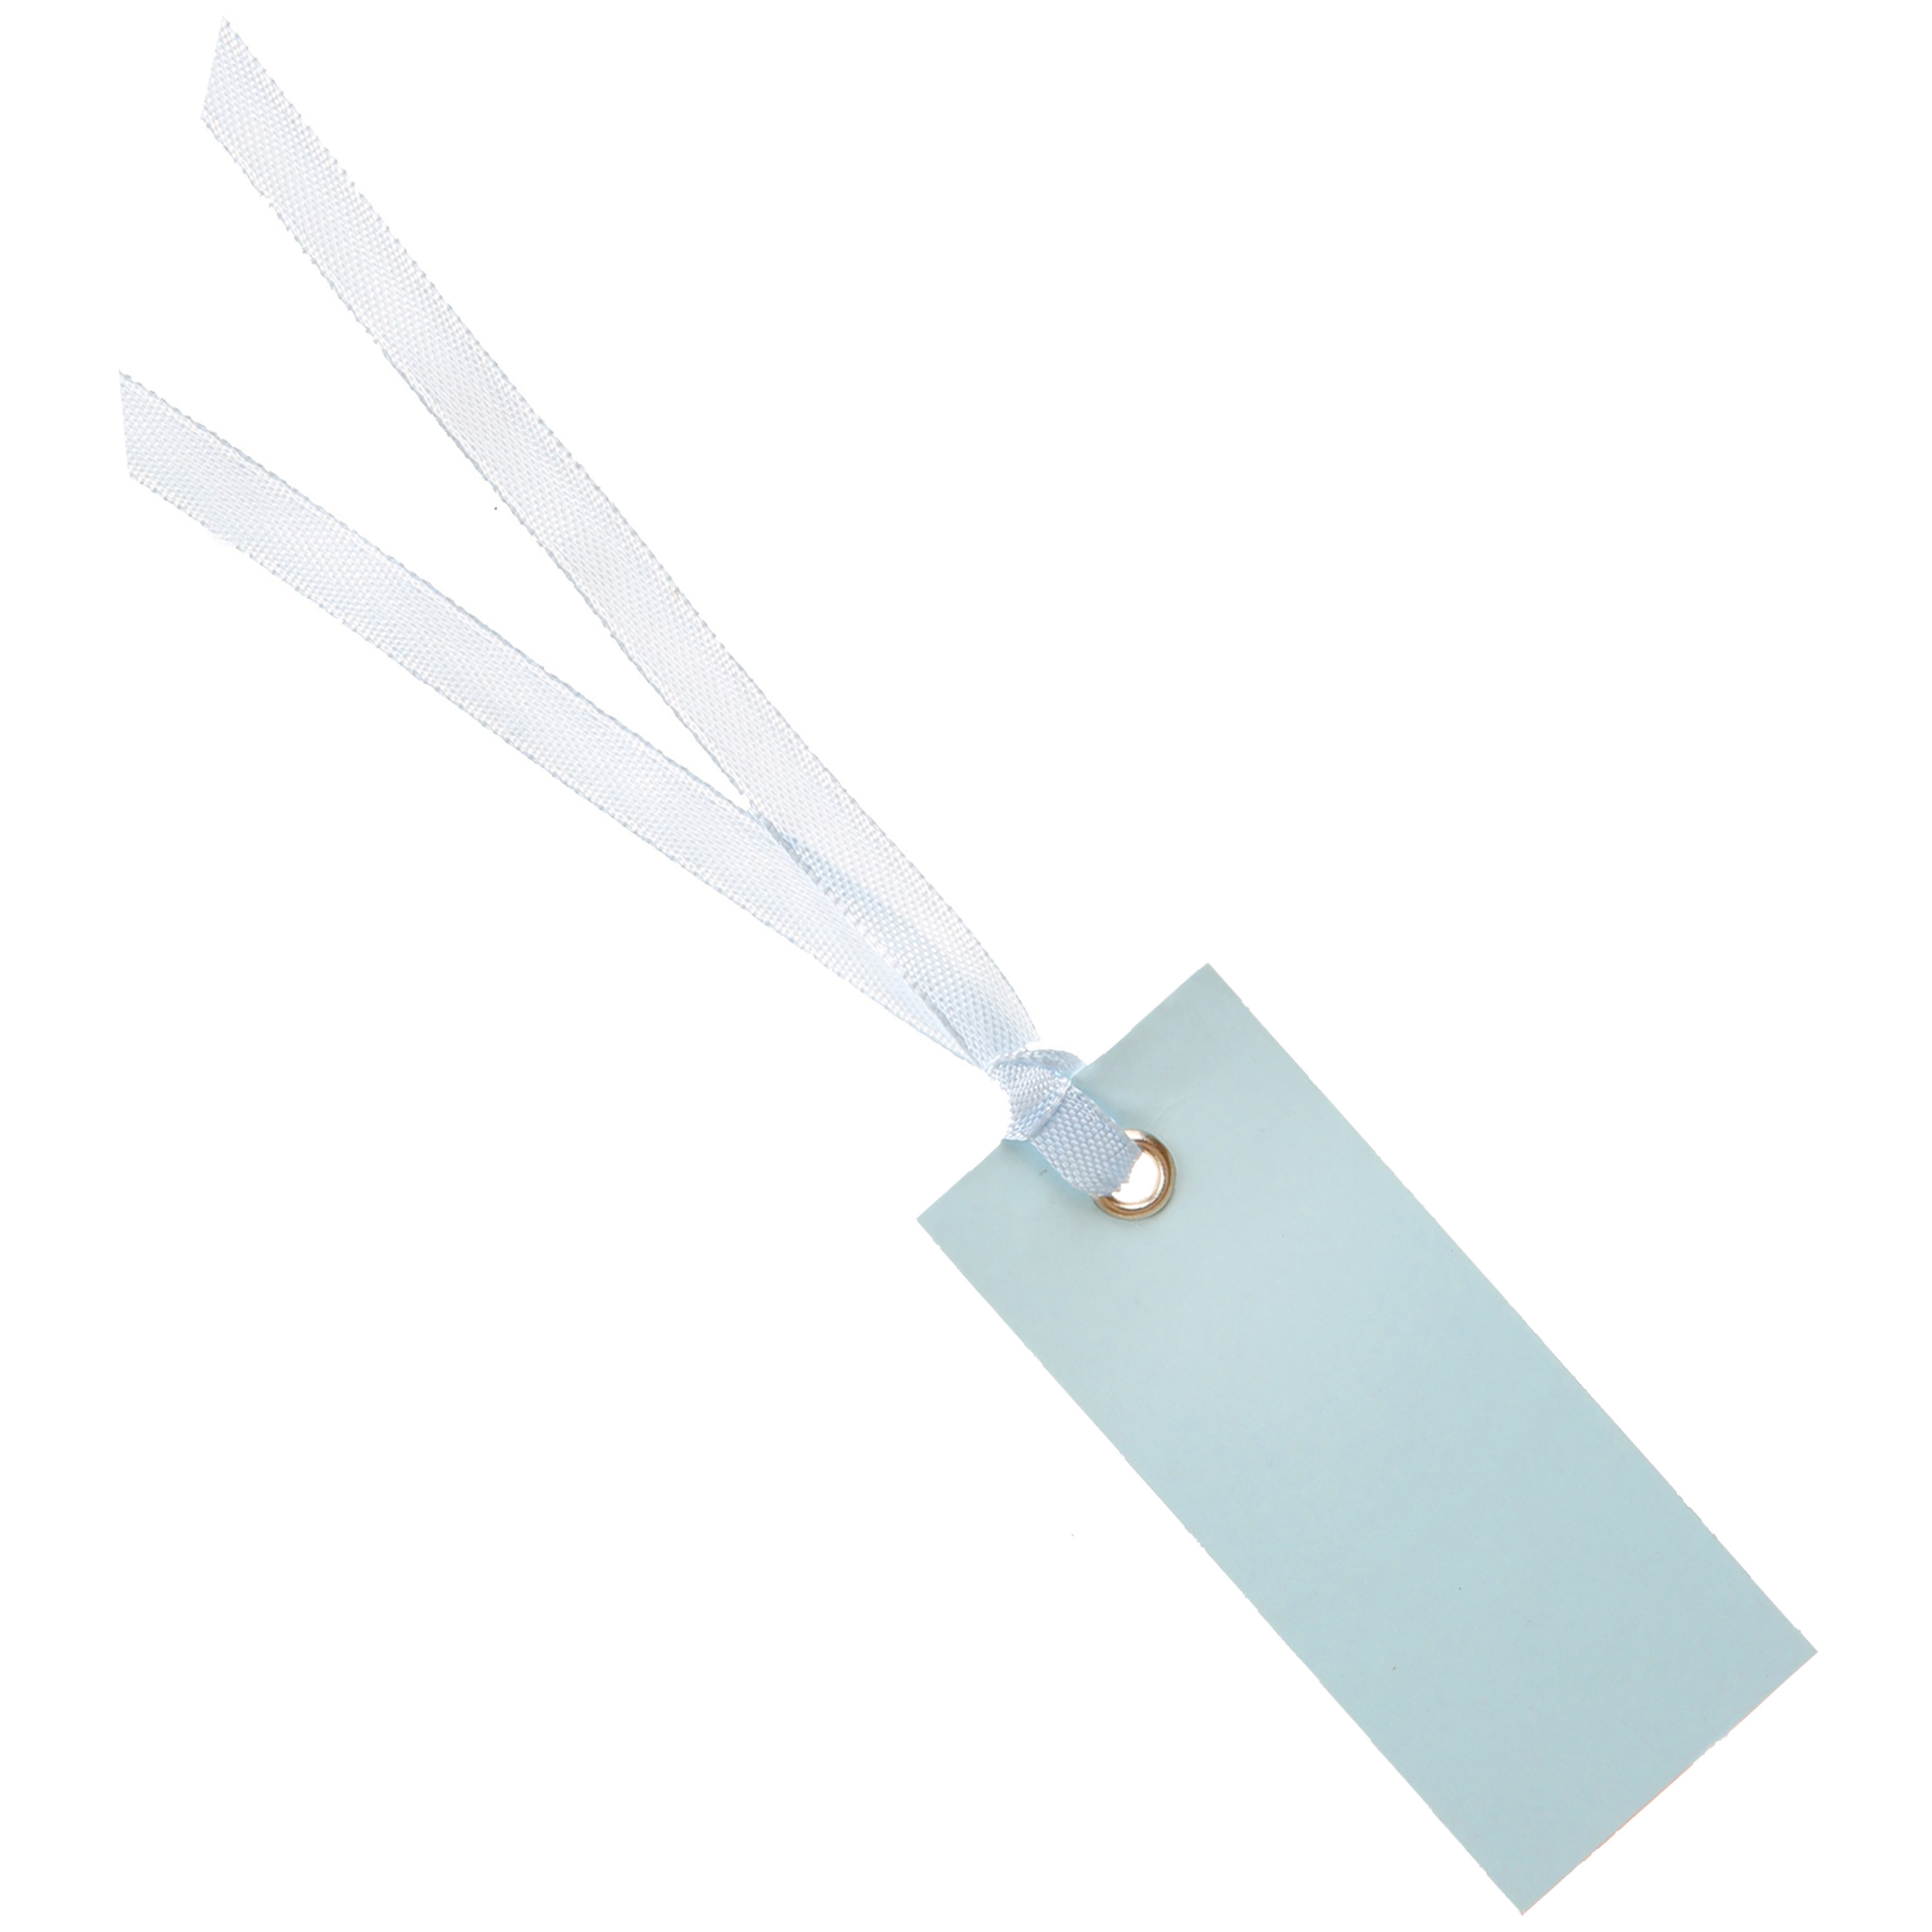 Santex cadeaulabels met lintje set 12x stuks licht blauw 3 x 7 cm naam tags